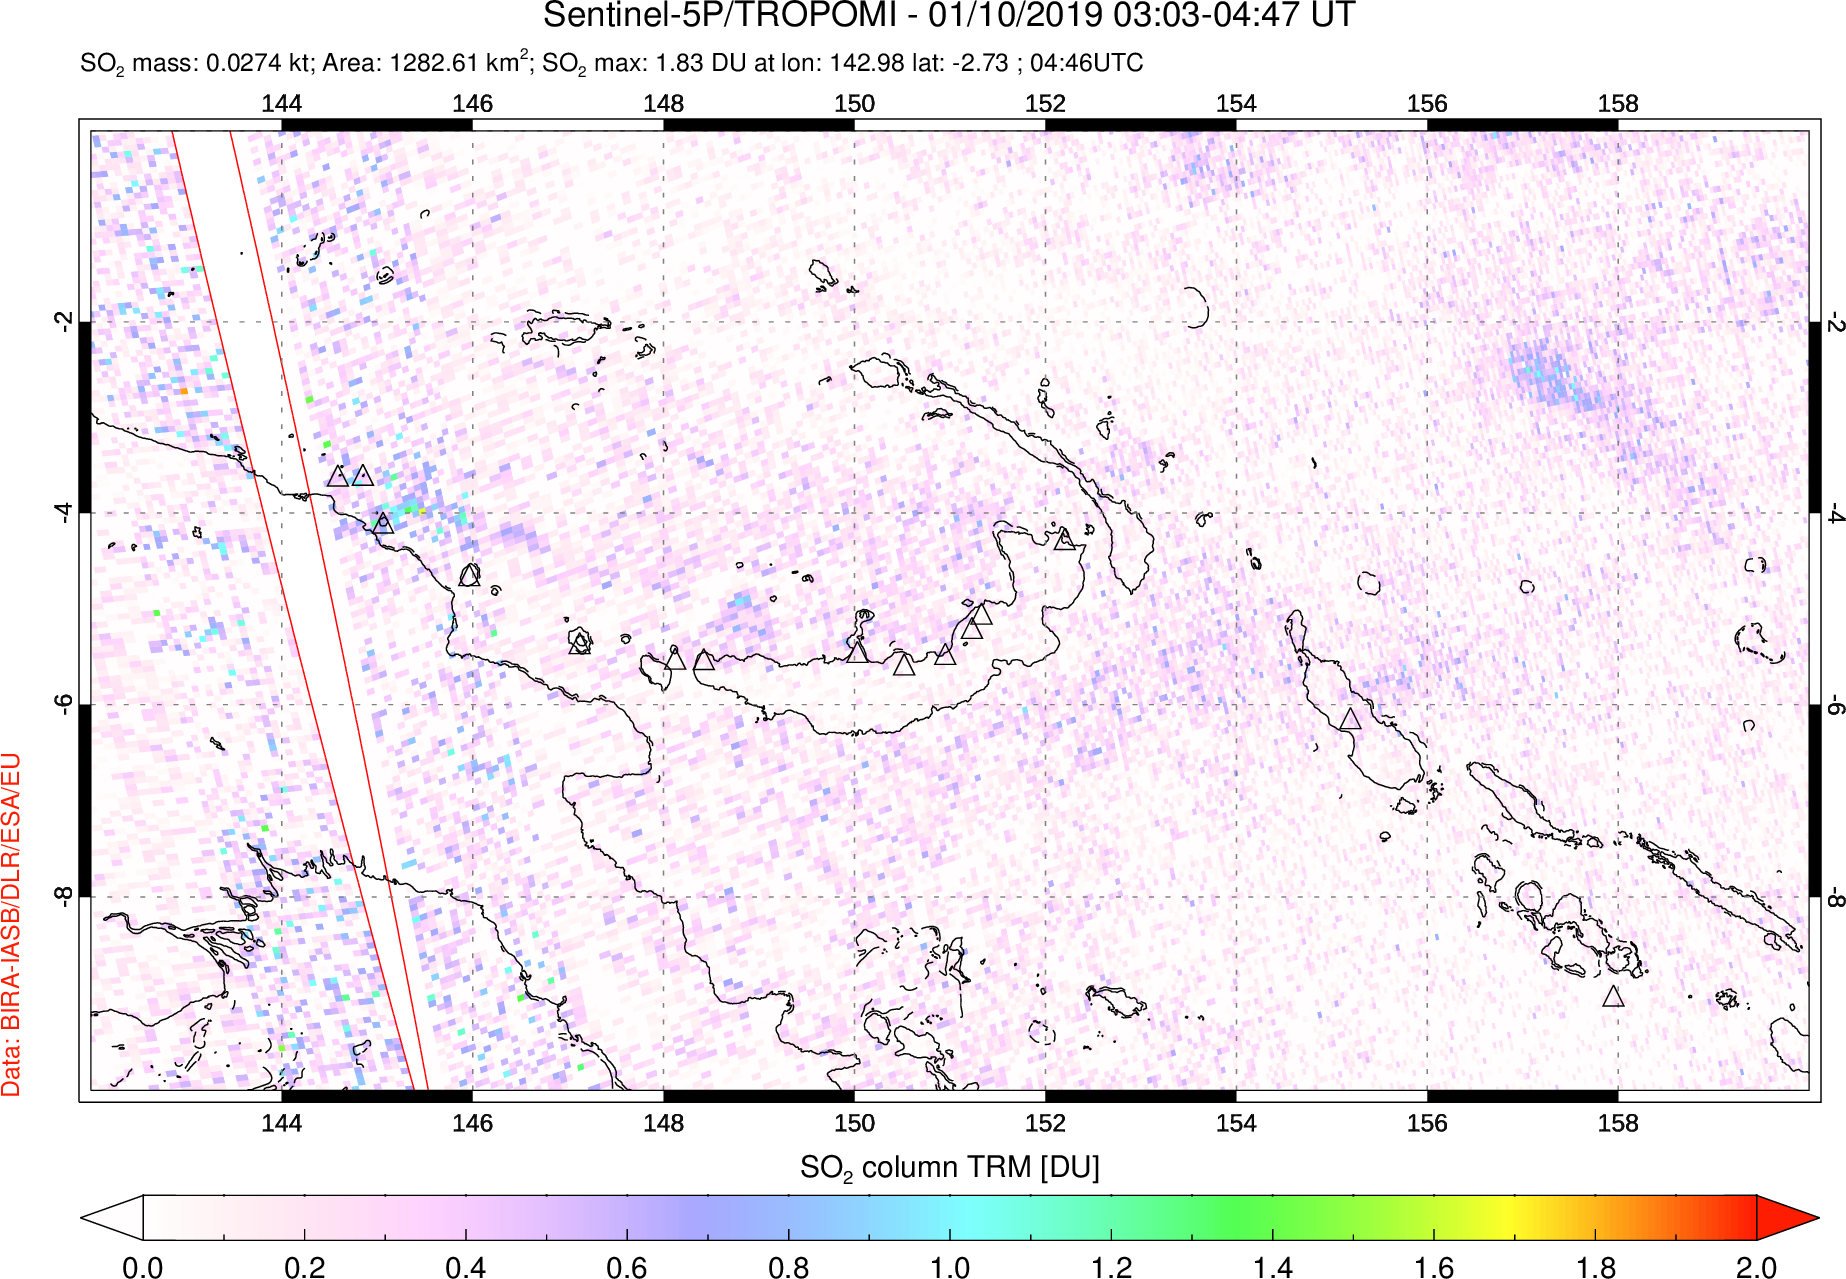 A sulfur dioxide image over Papua, New Guinea on Jan 10, 2019.